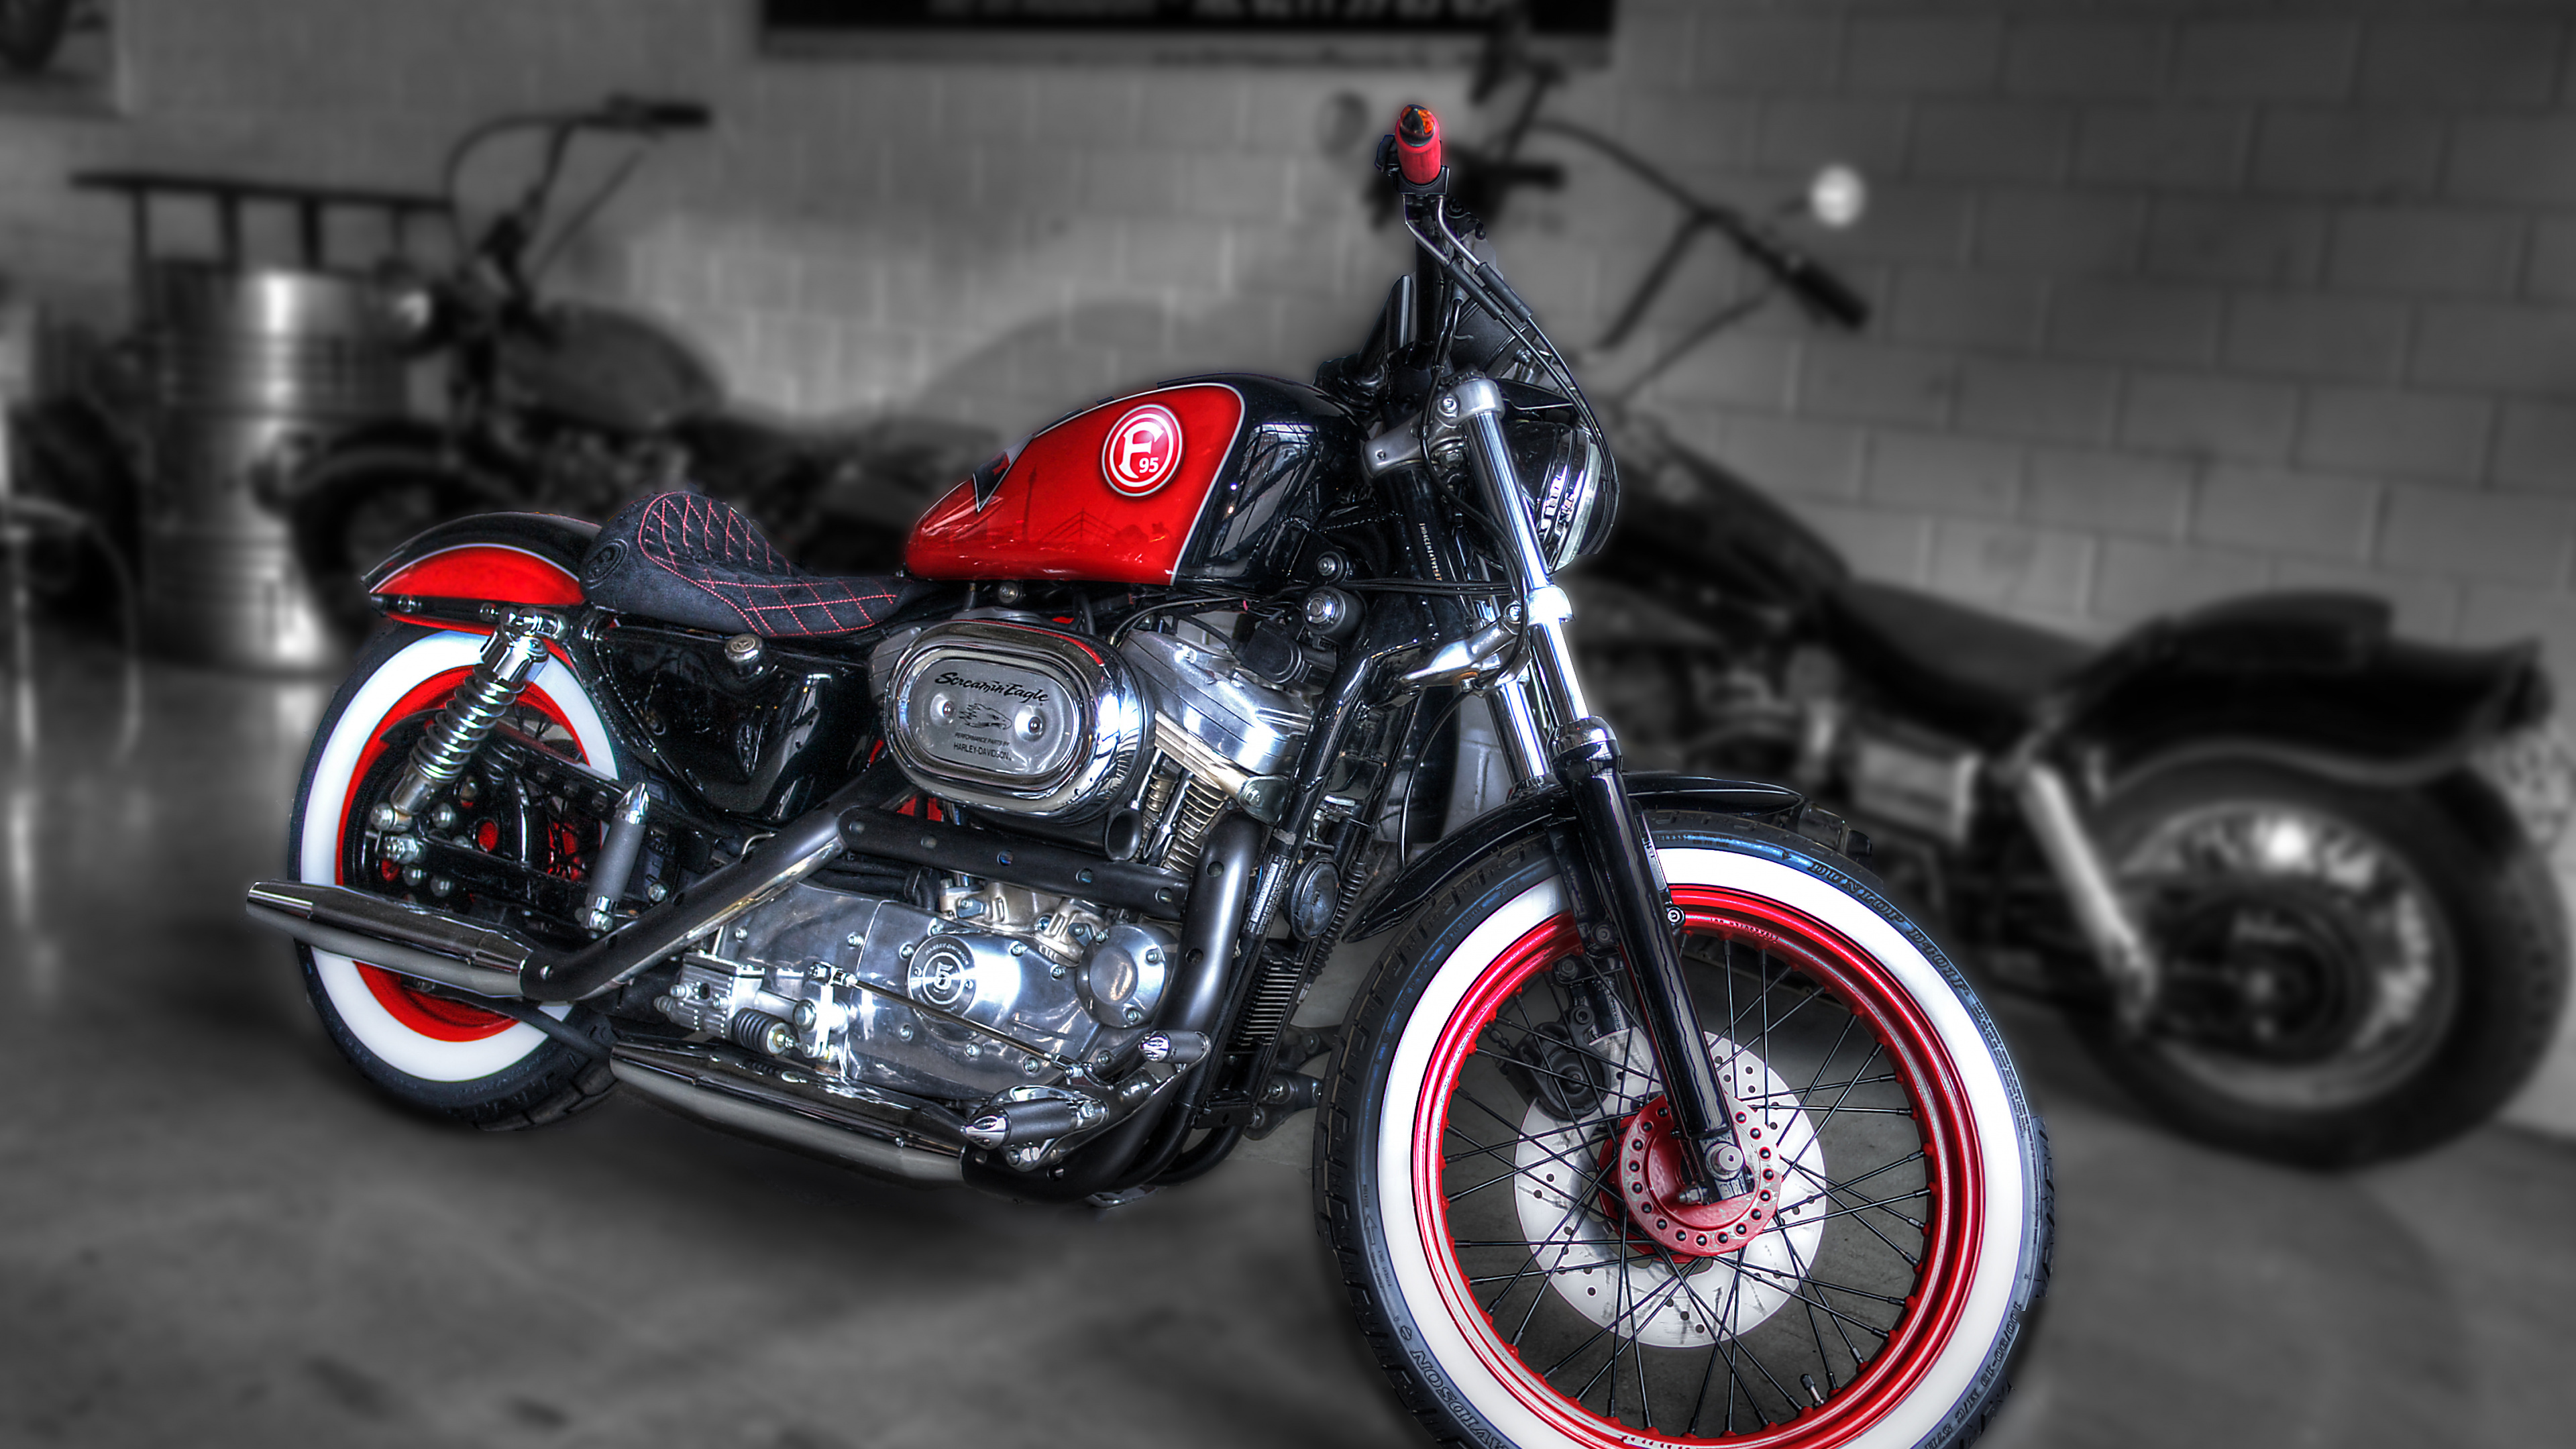 Motocicleta Cruiser Roja y Negra. Wallpaper in 3840x2160 Resolution